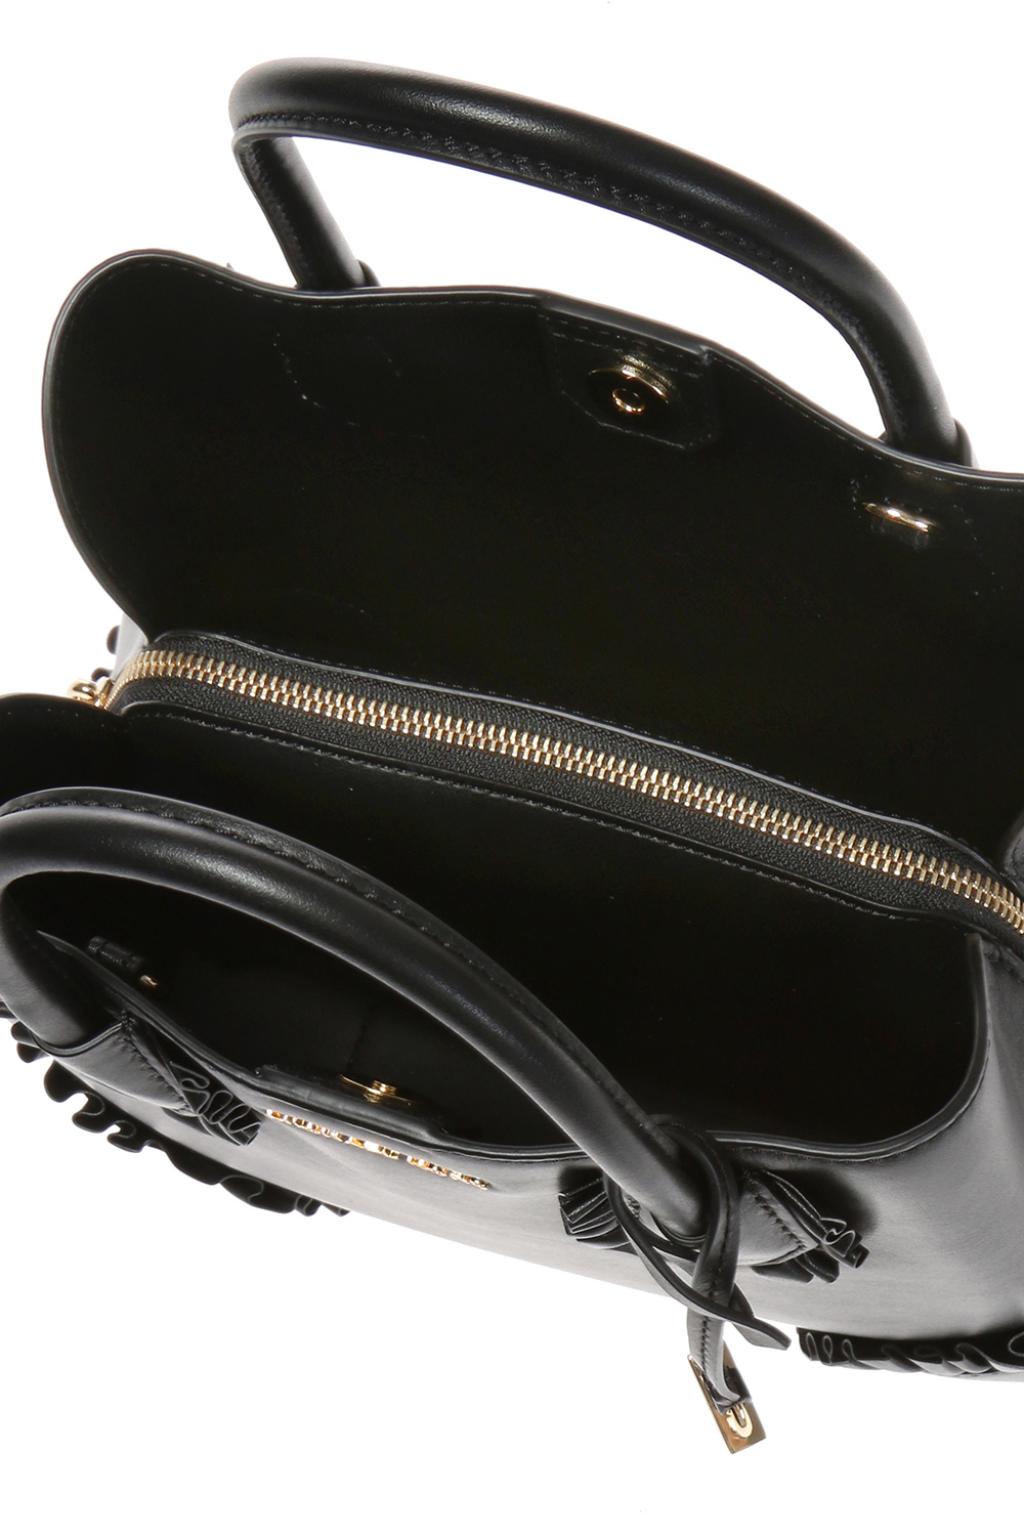 Michael Kors Crossbody Bag Studio Mercer Gallery Small Ruffled Leather Satchel Black # 30S8GZ5T5Y